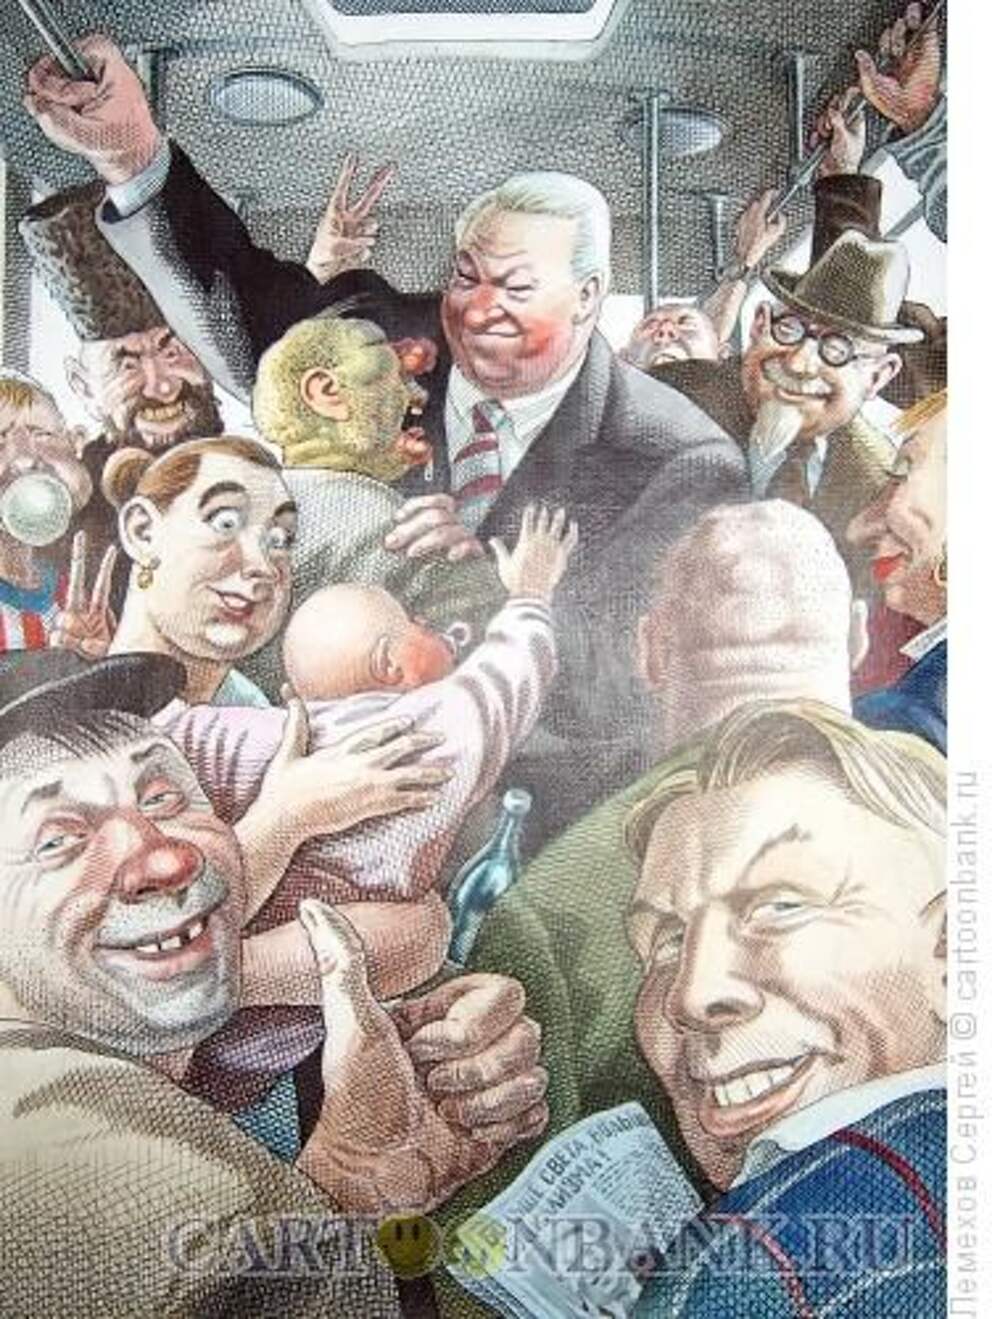 Горбачев и Ельцин карикатура